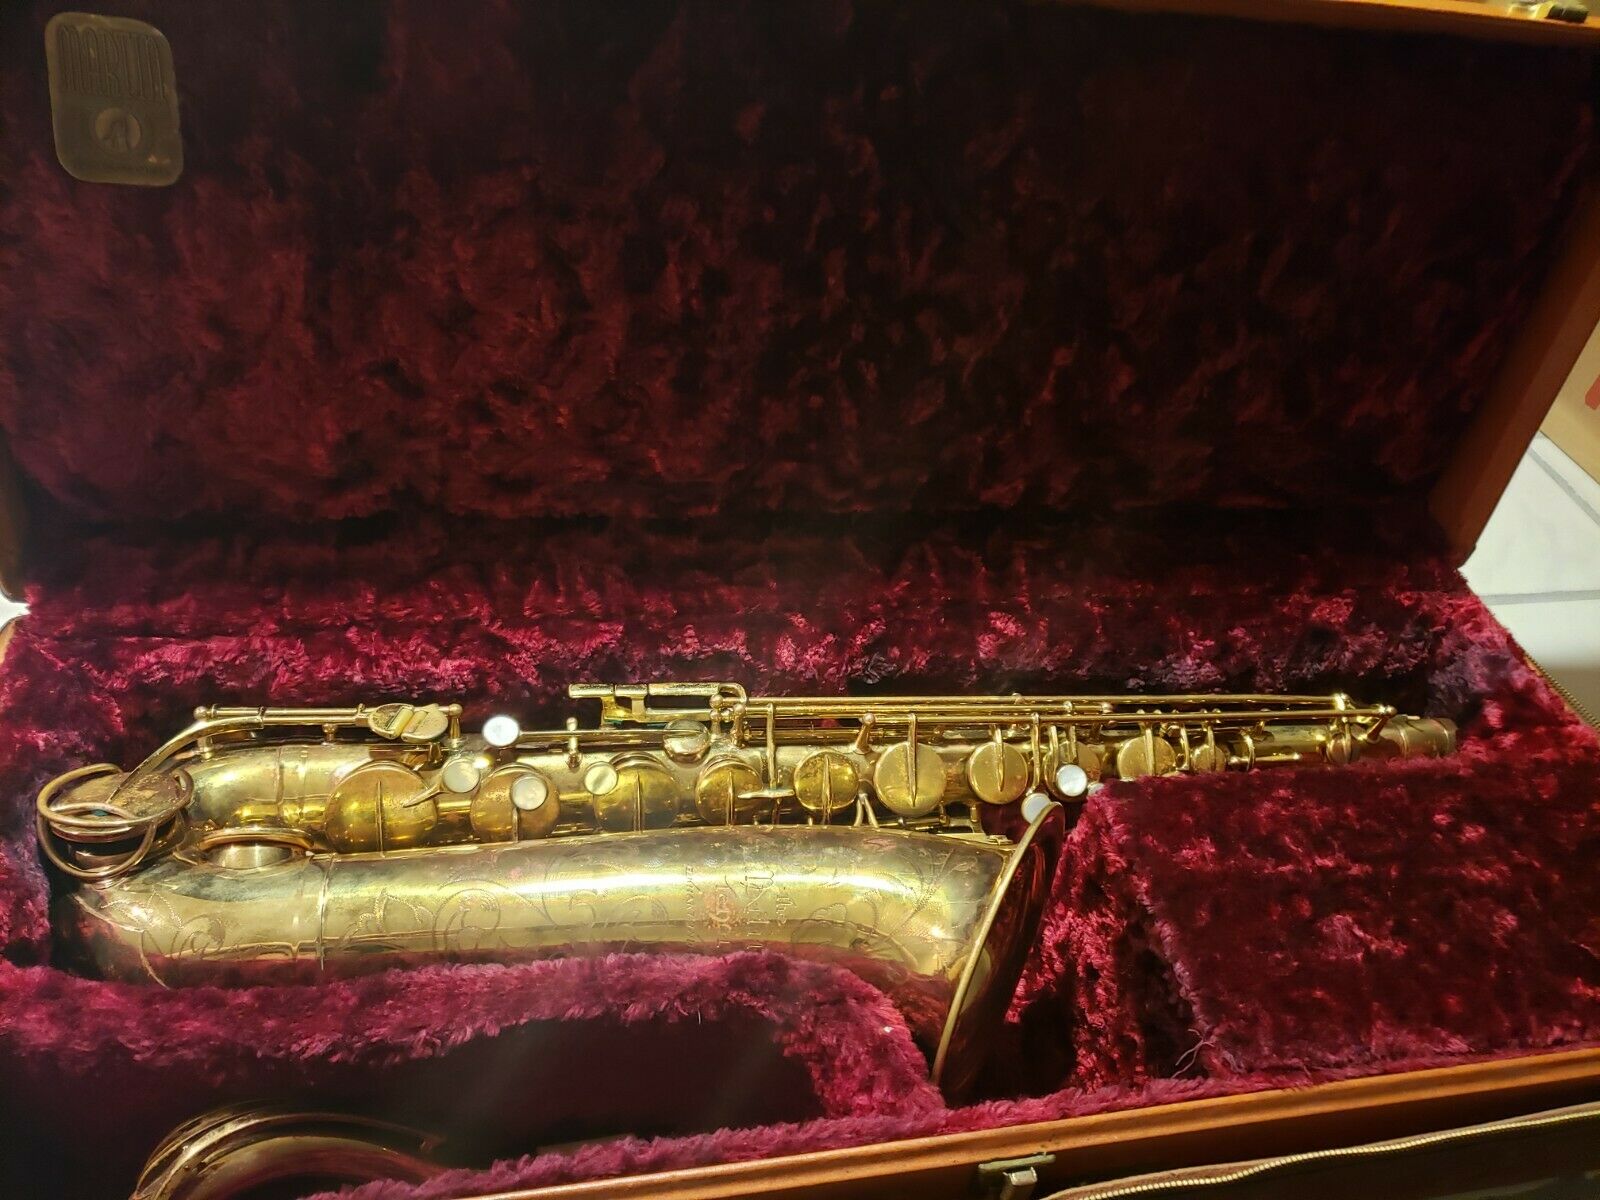 1946 Martin Committee Iii "the Martin" Tenor Saxophone Fully Refurbished